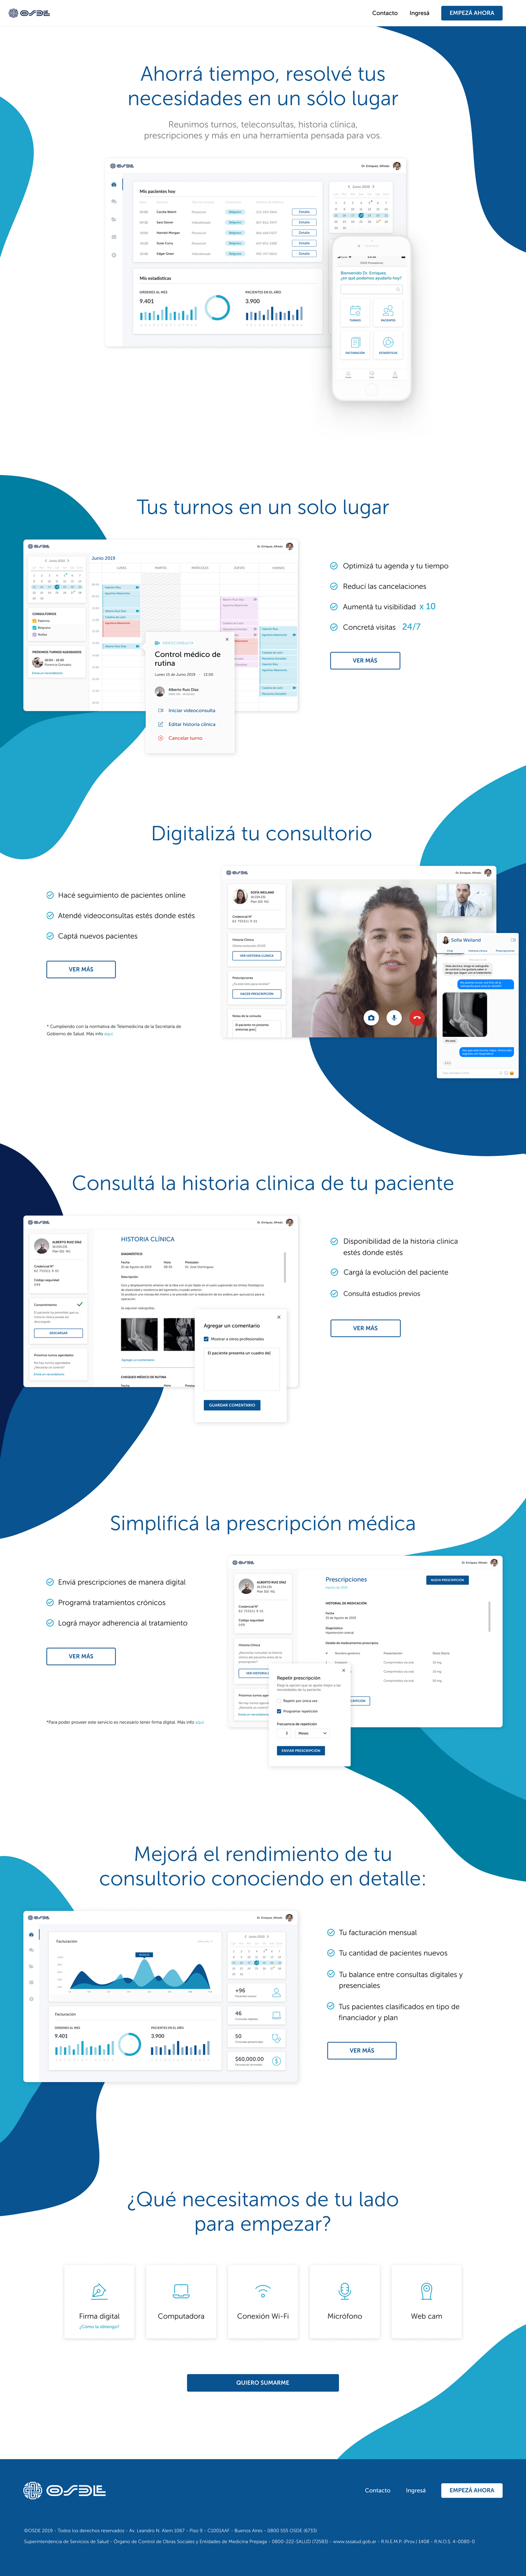 OSDE's website prototype